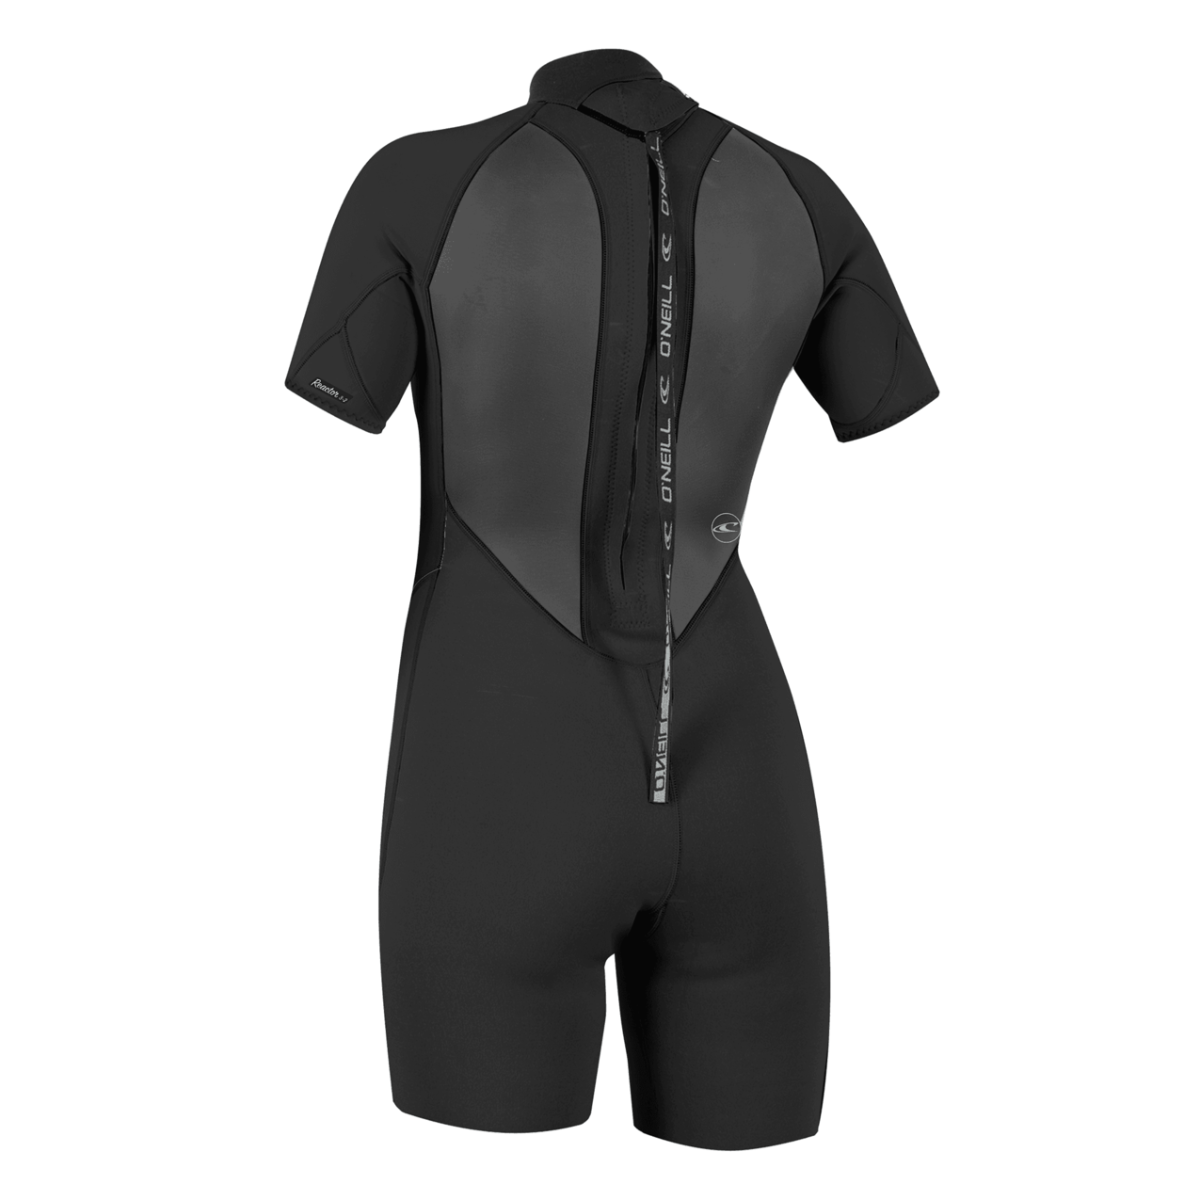 Oneill Women's Reactor-2 2mm Back Zip Short Sleeve Spring Wetsuit in Black - BoardCo